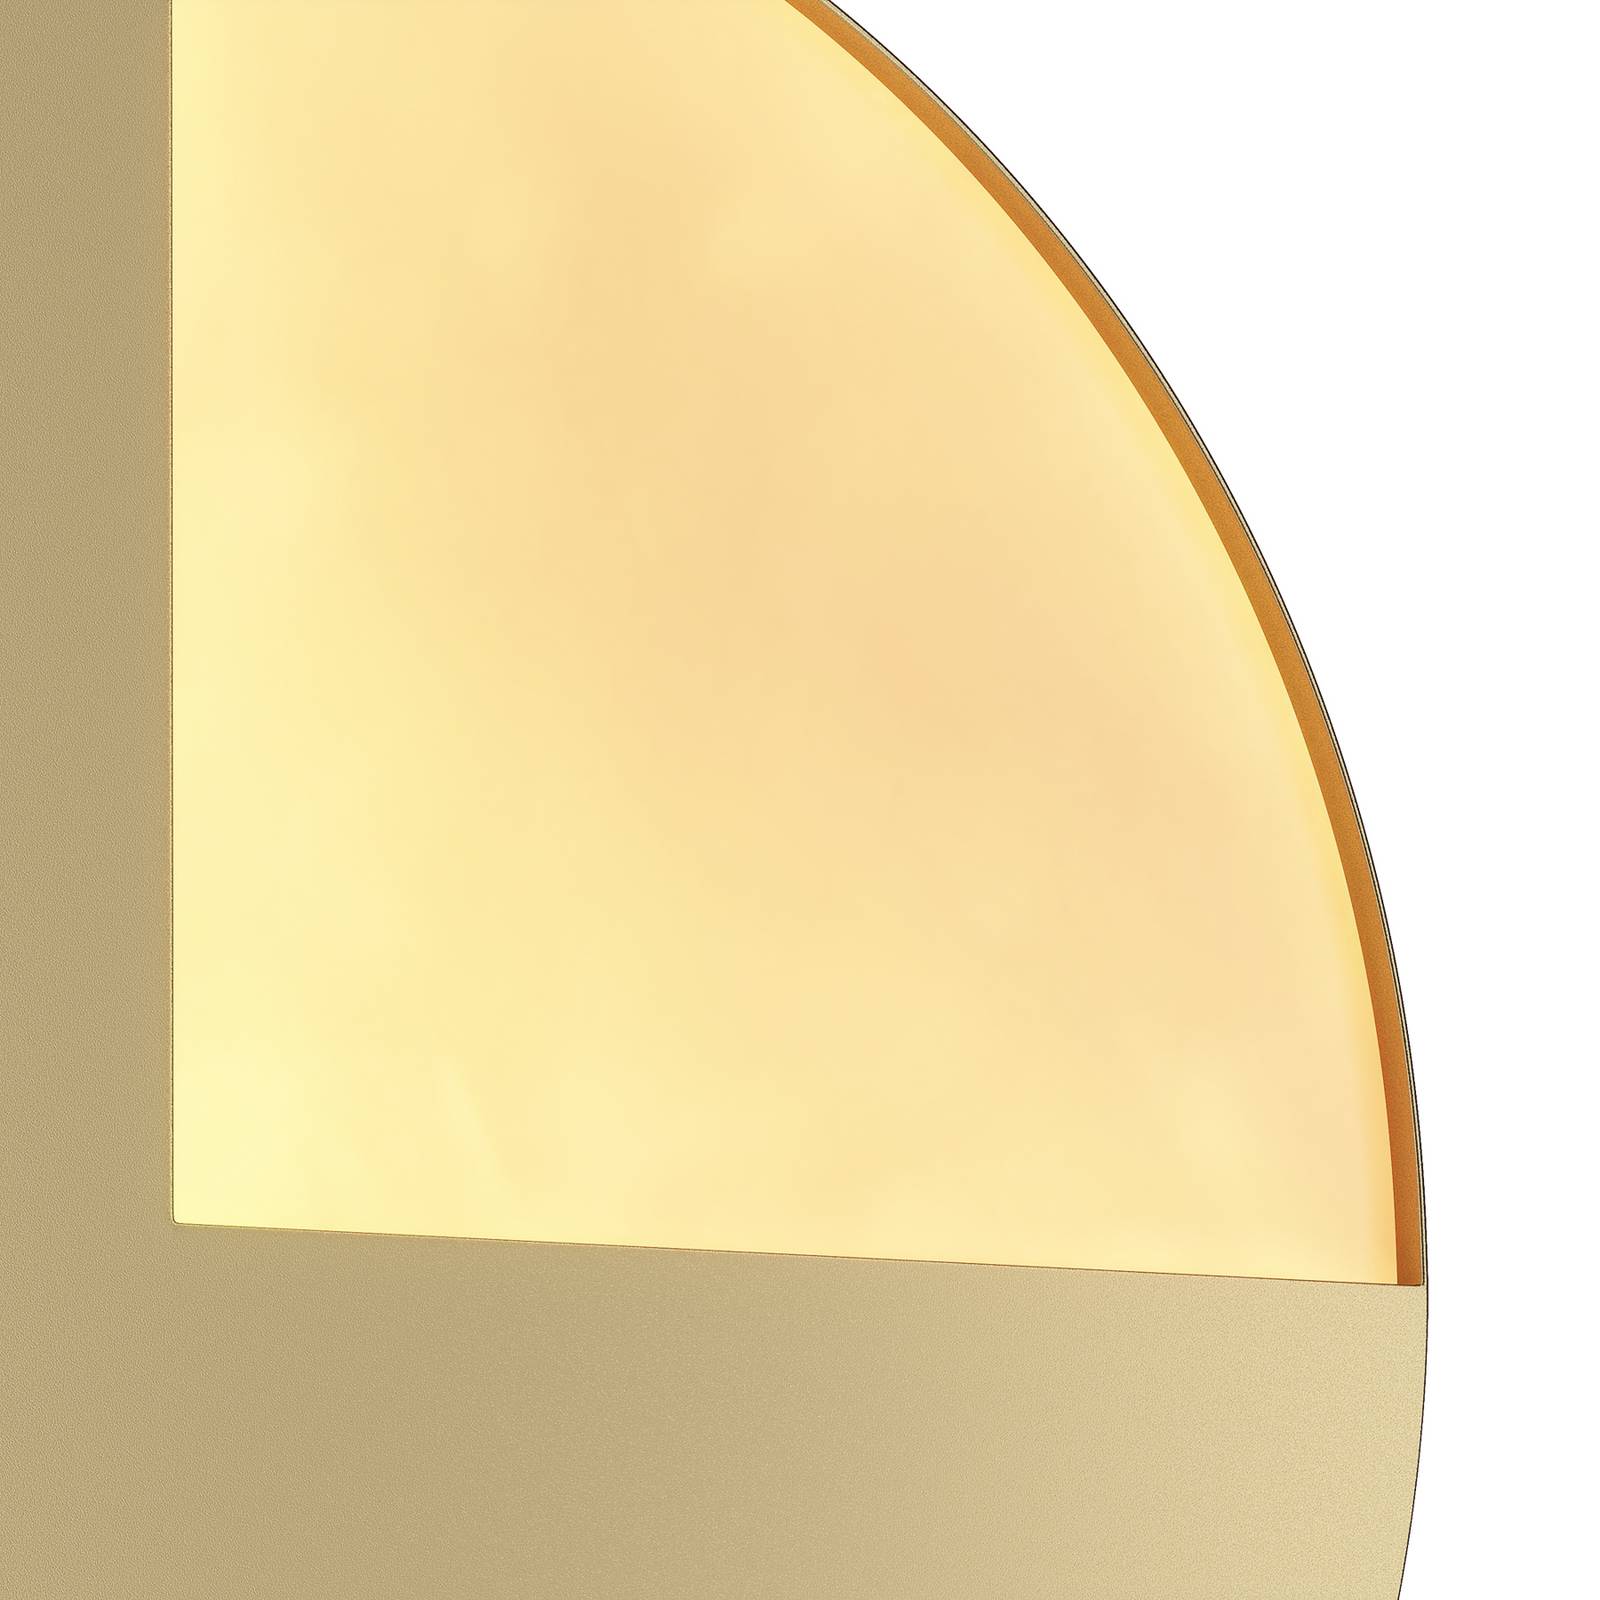 Maytoni Jupiter LED-Wandlampe, gold, Ø 25cm günstig online kaufen